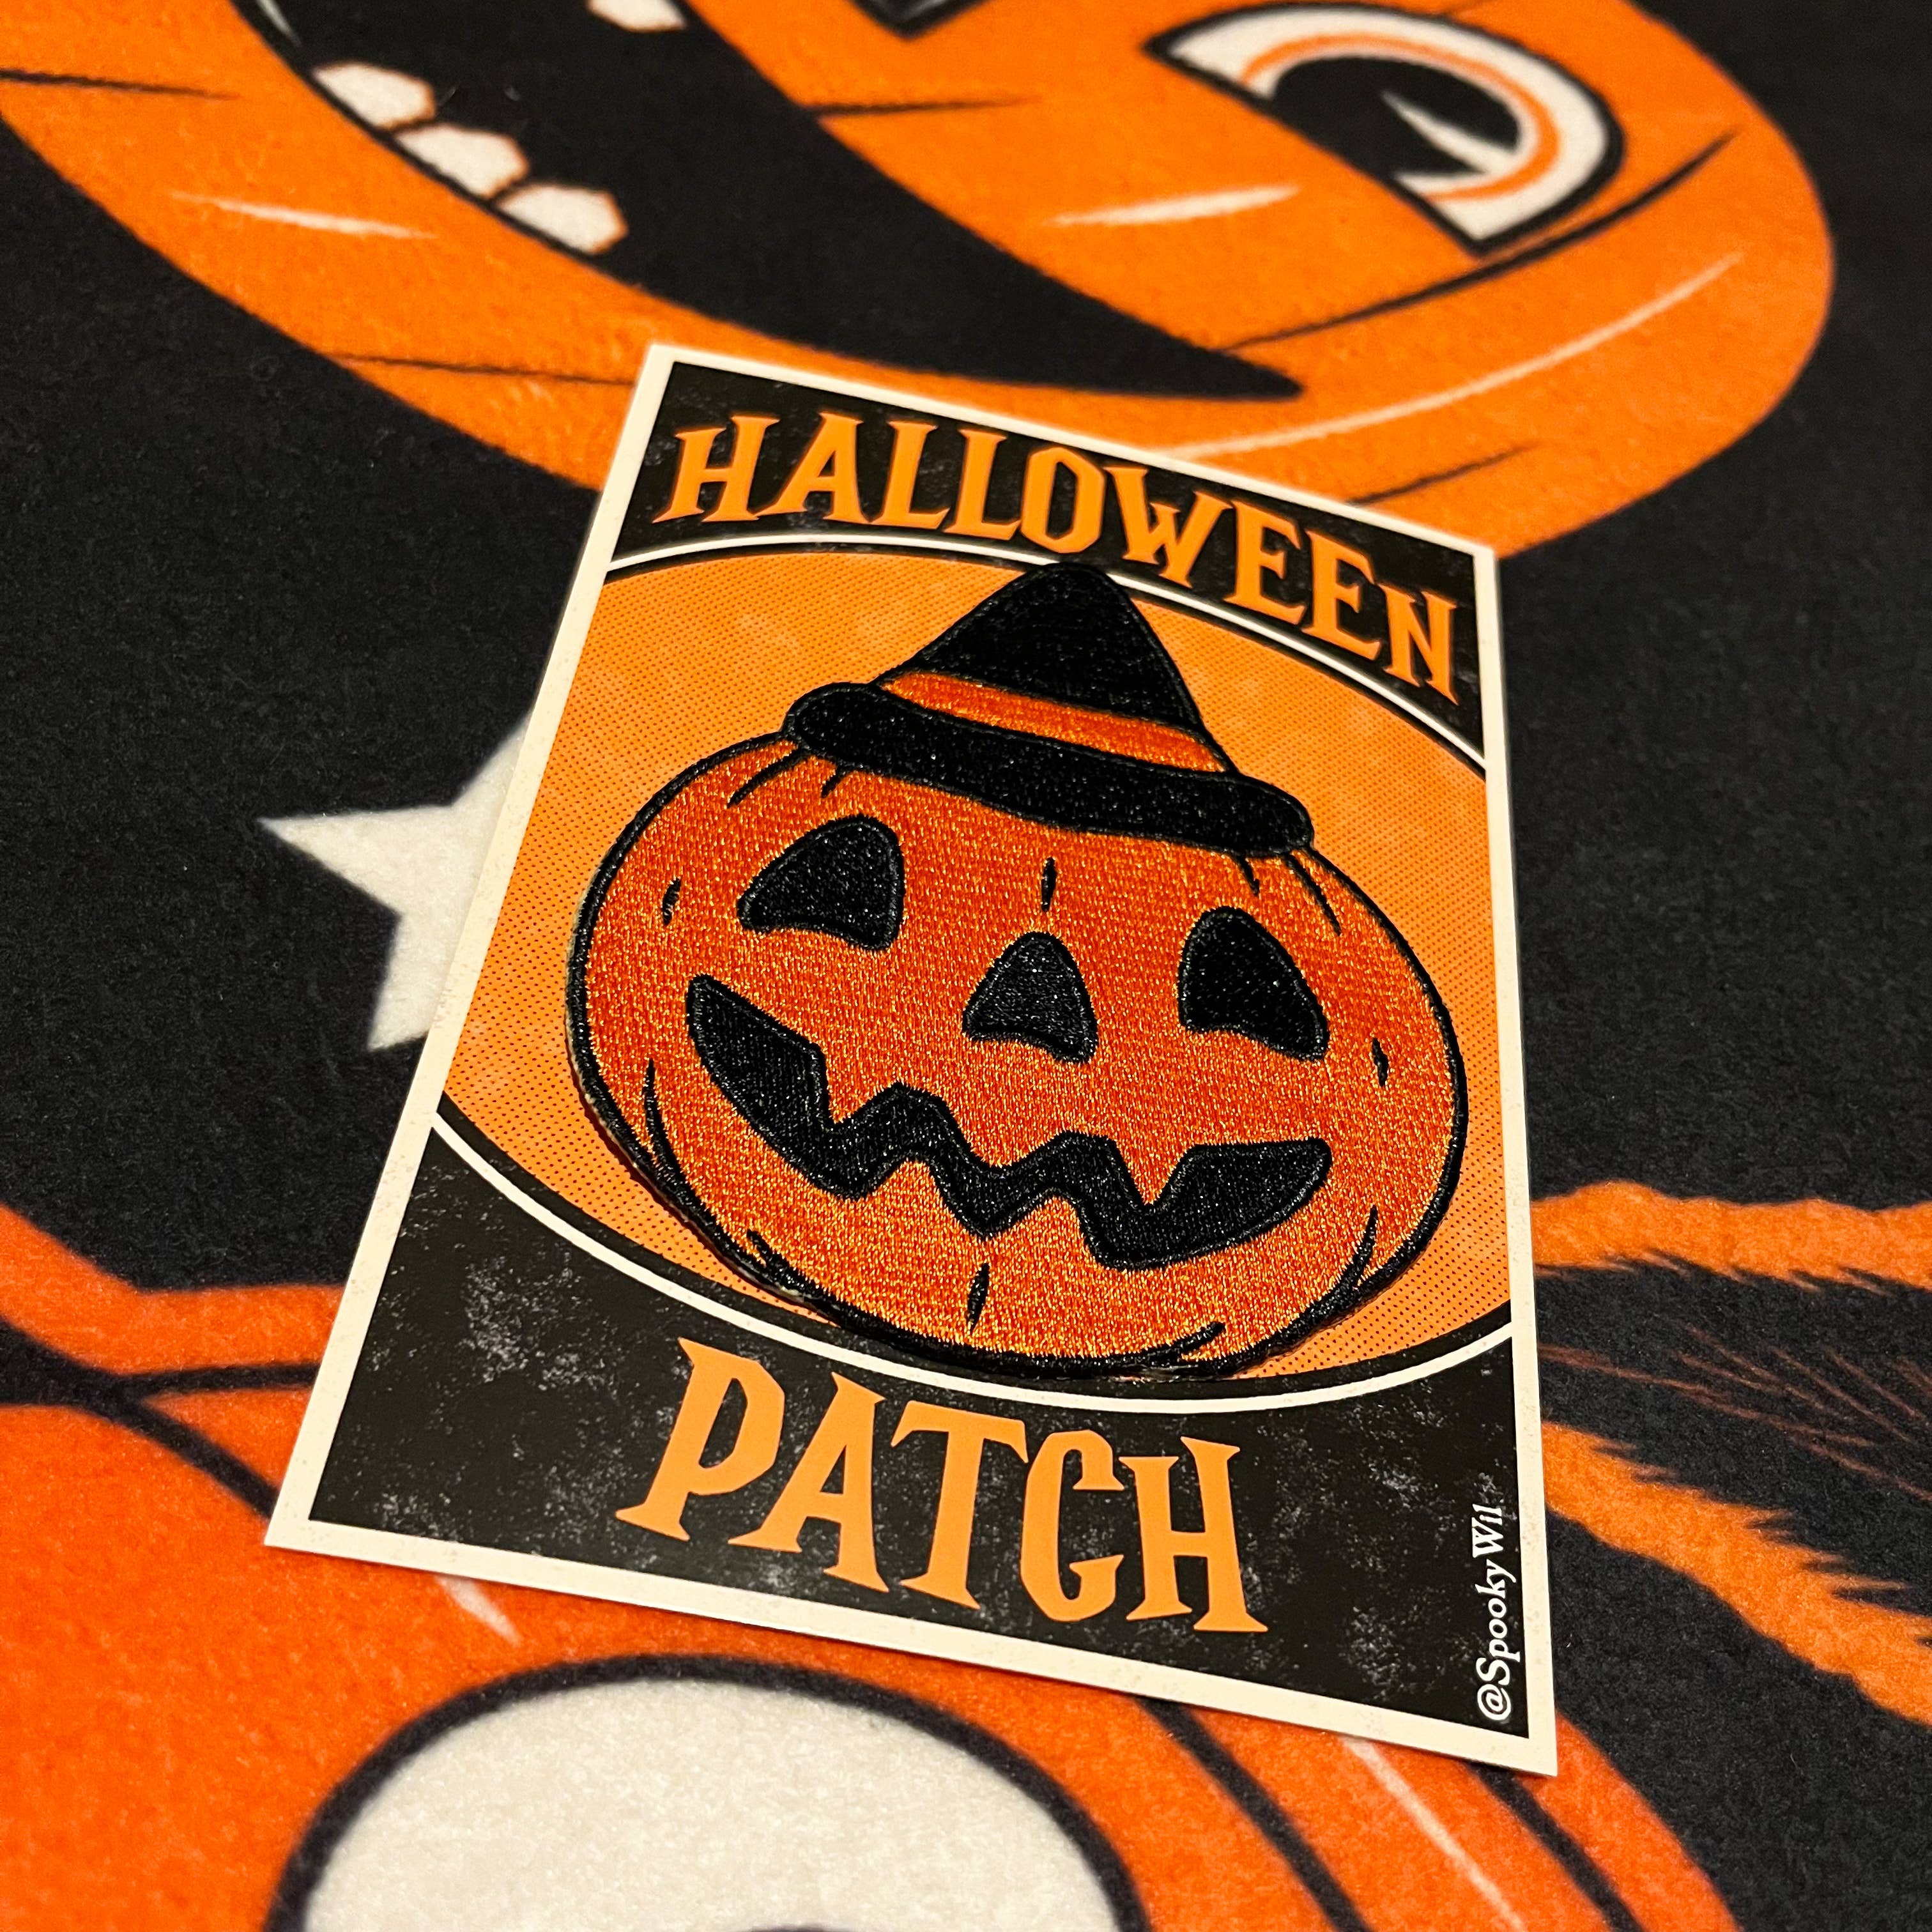 Jack O'Lantern Halloween Patch